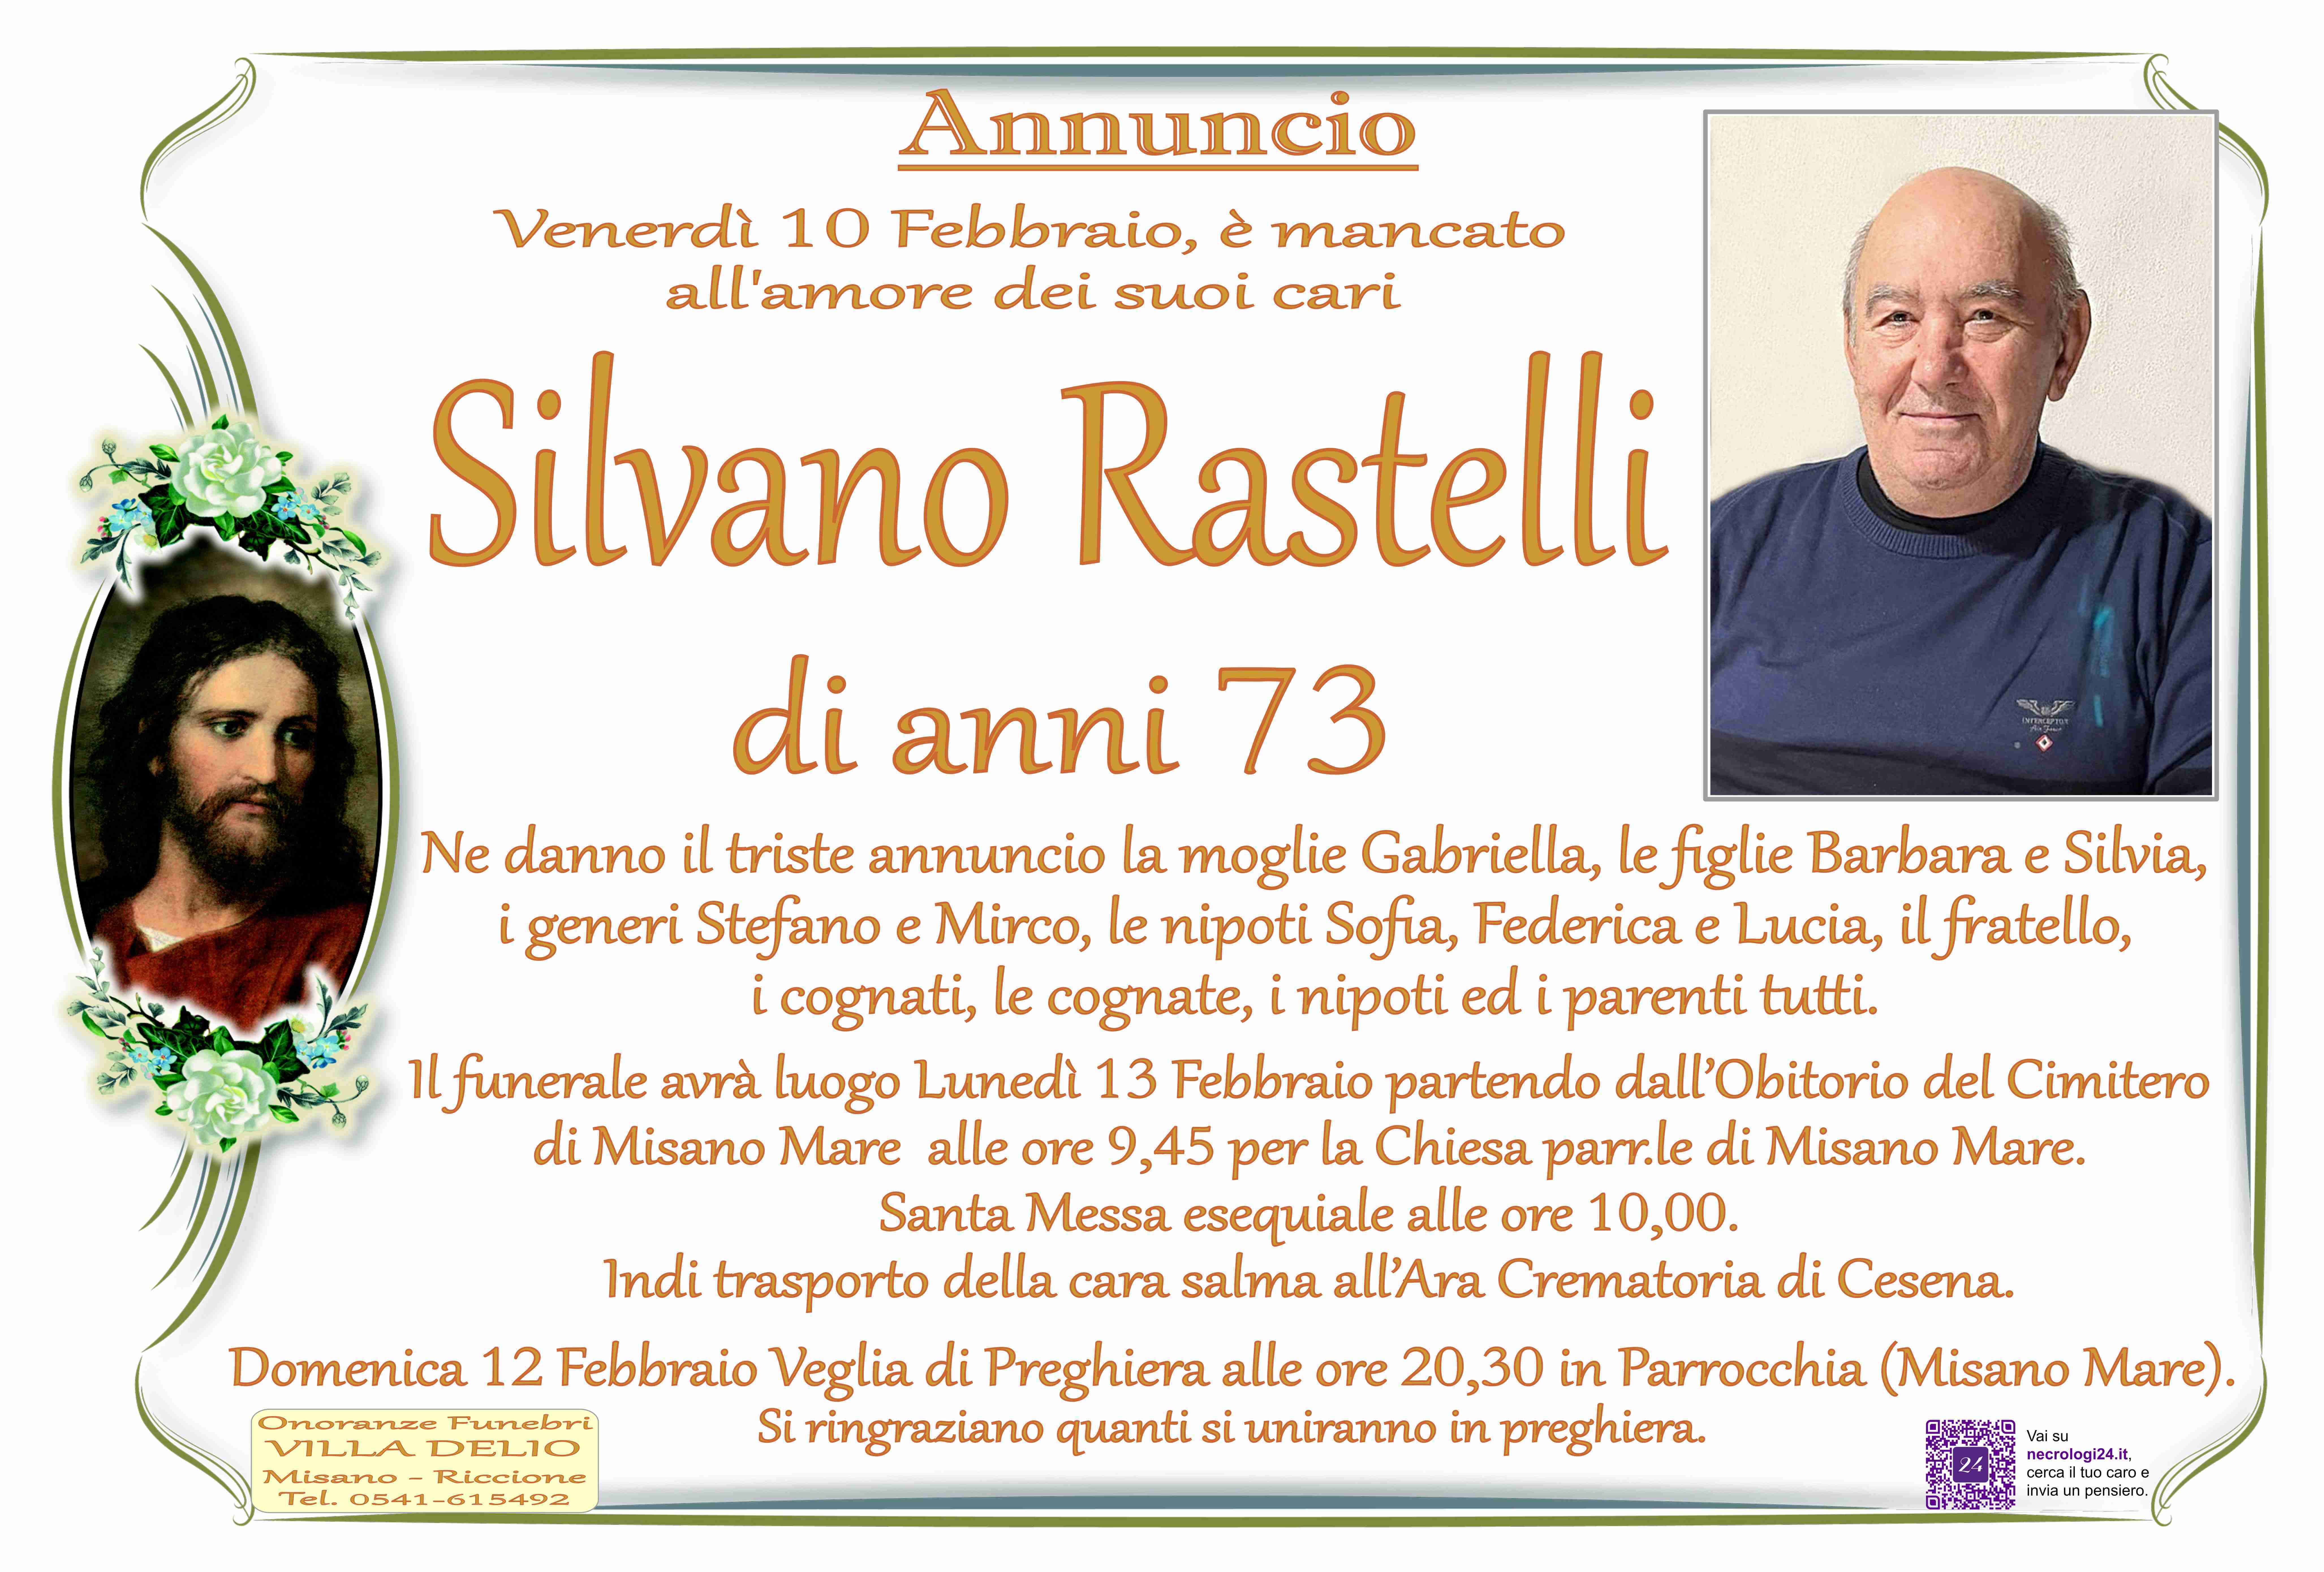 Silvano Rastelli